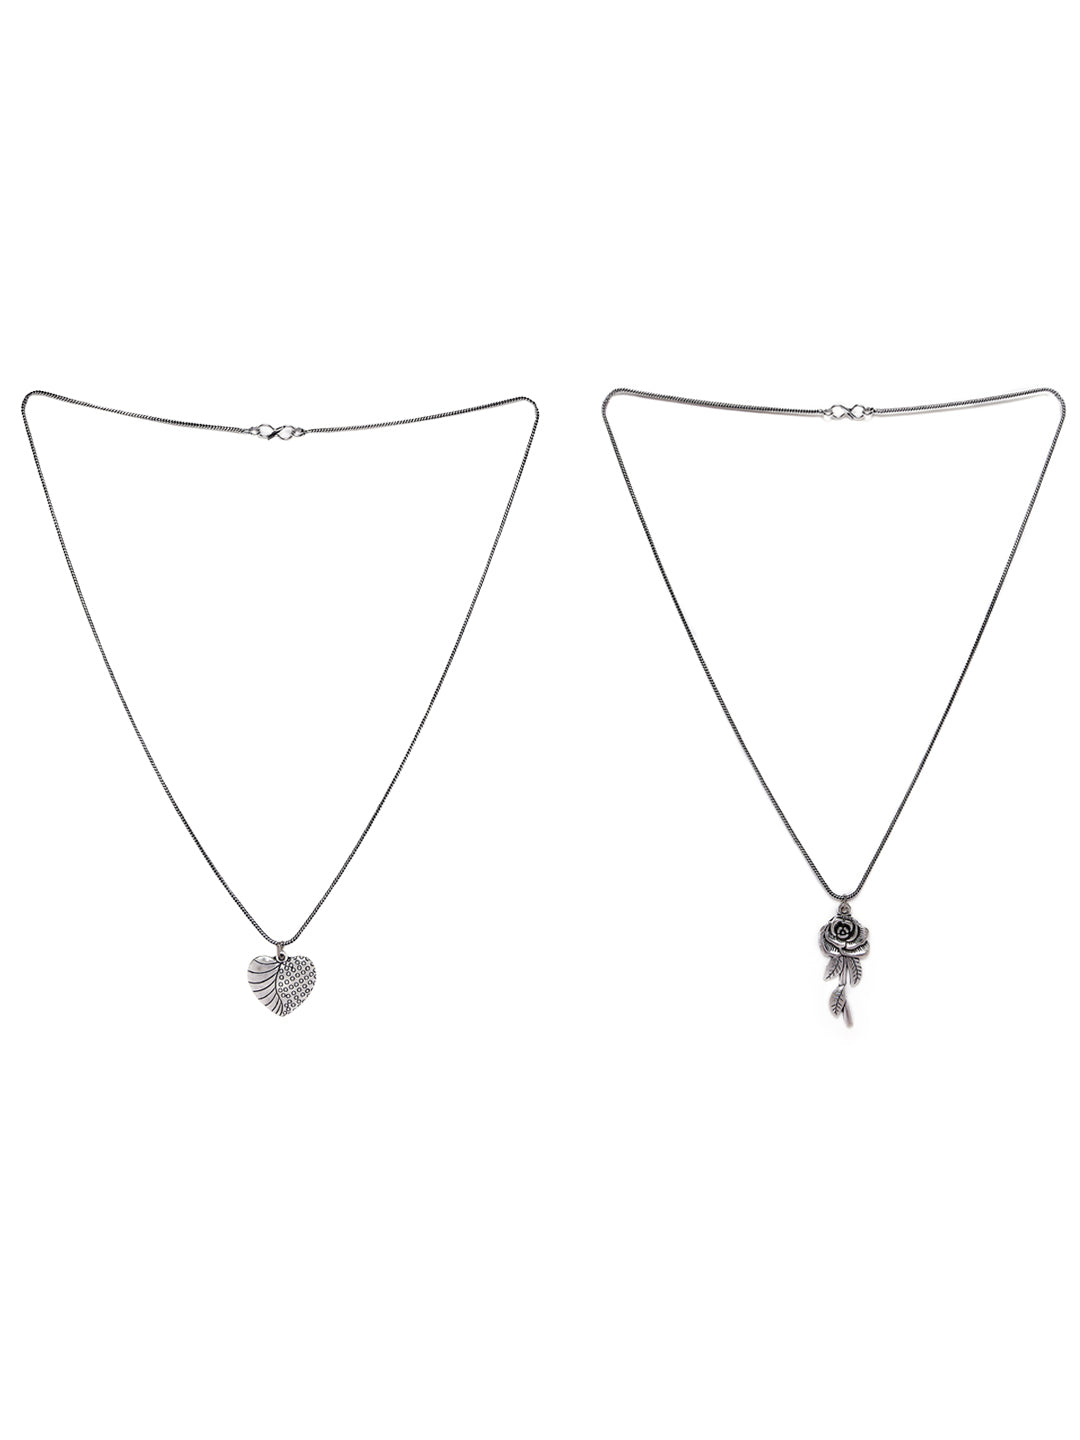 Set of 2 Heart & Rose shaped Oxidised Silver-Toned Textured Necklace - Jazzandsizzle